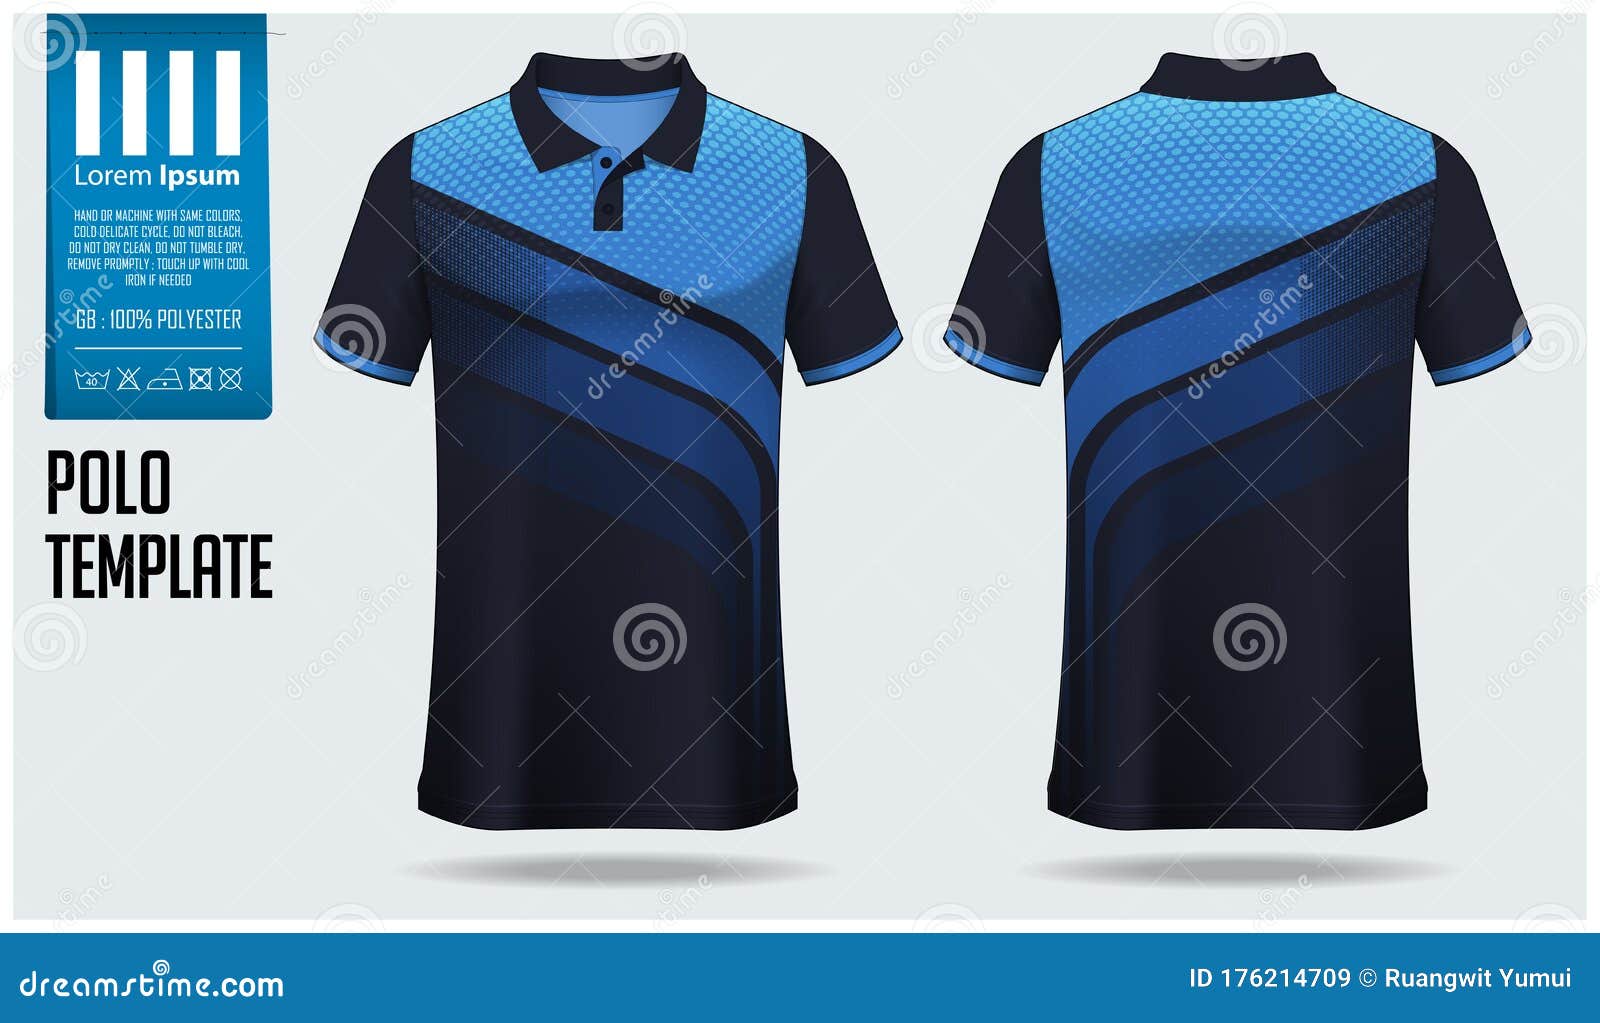 JIEBANG 2020 Scotland Rugby Jersey New T-Shirt Entraînement Sportif Écossais Chemise De Football pour Hommes Femmes 100% Polyester Tissu Respirant